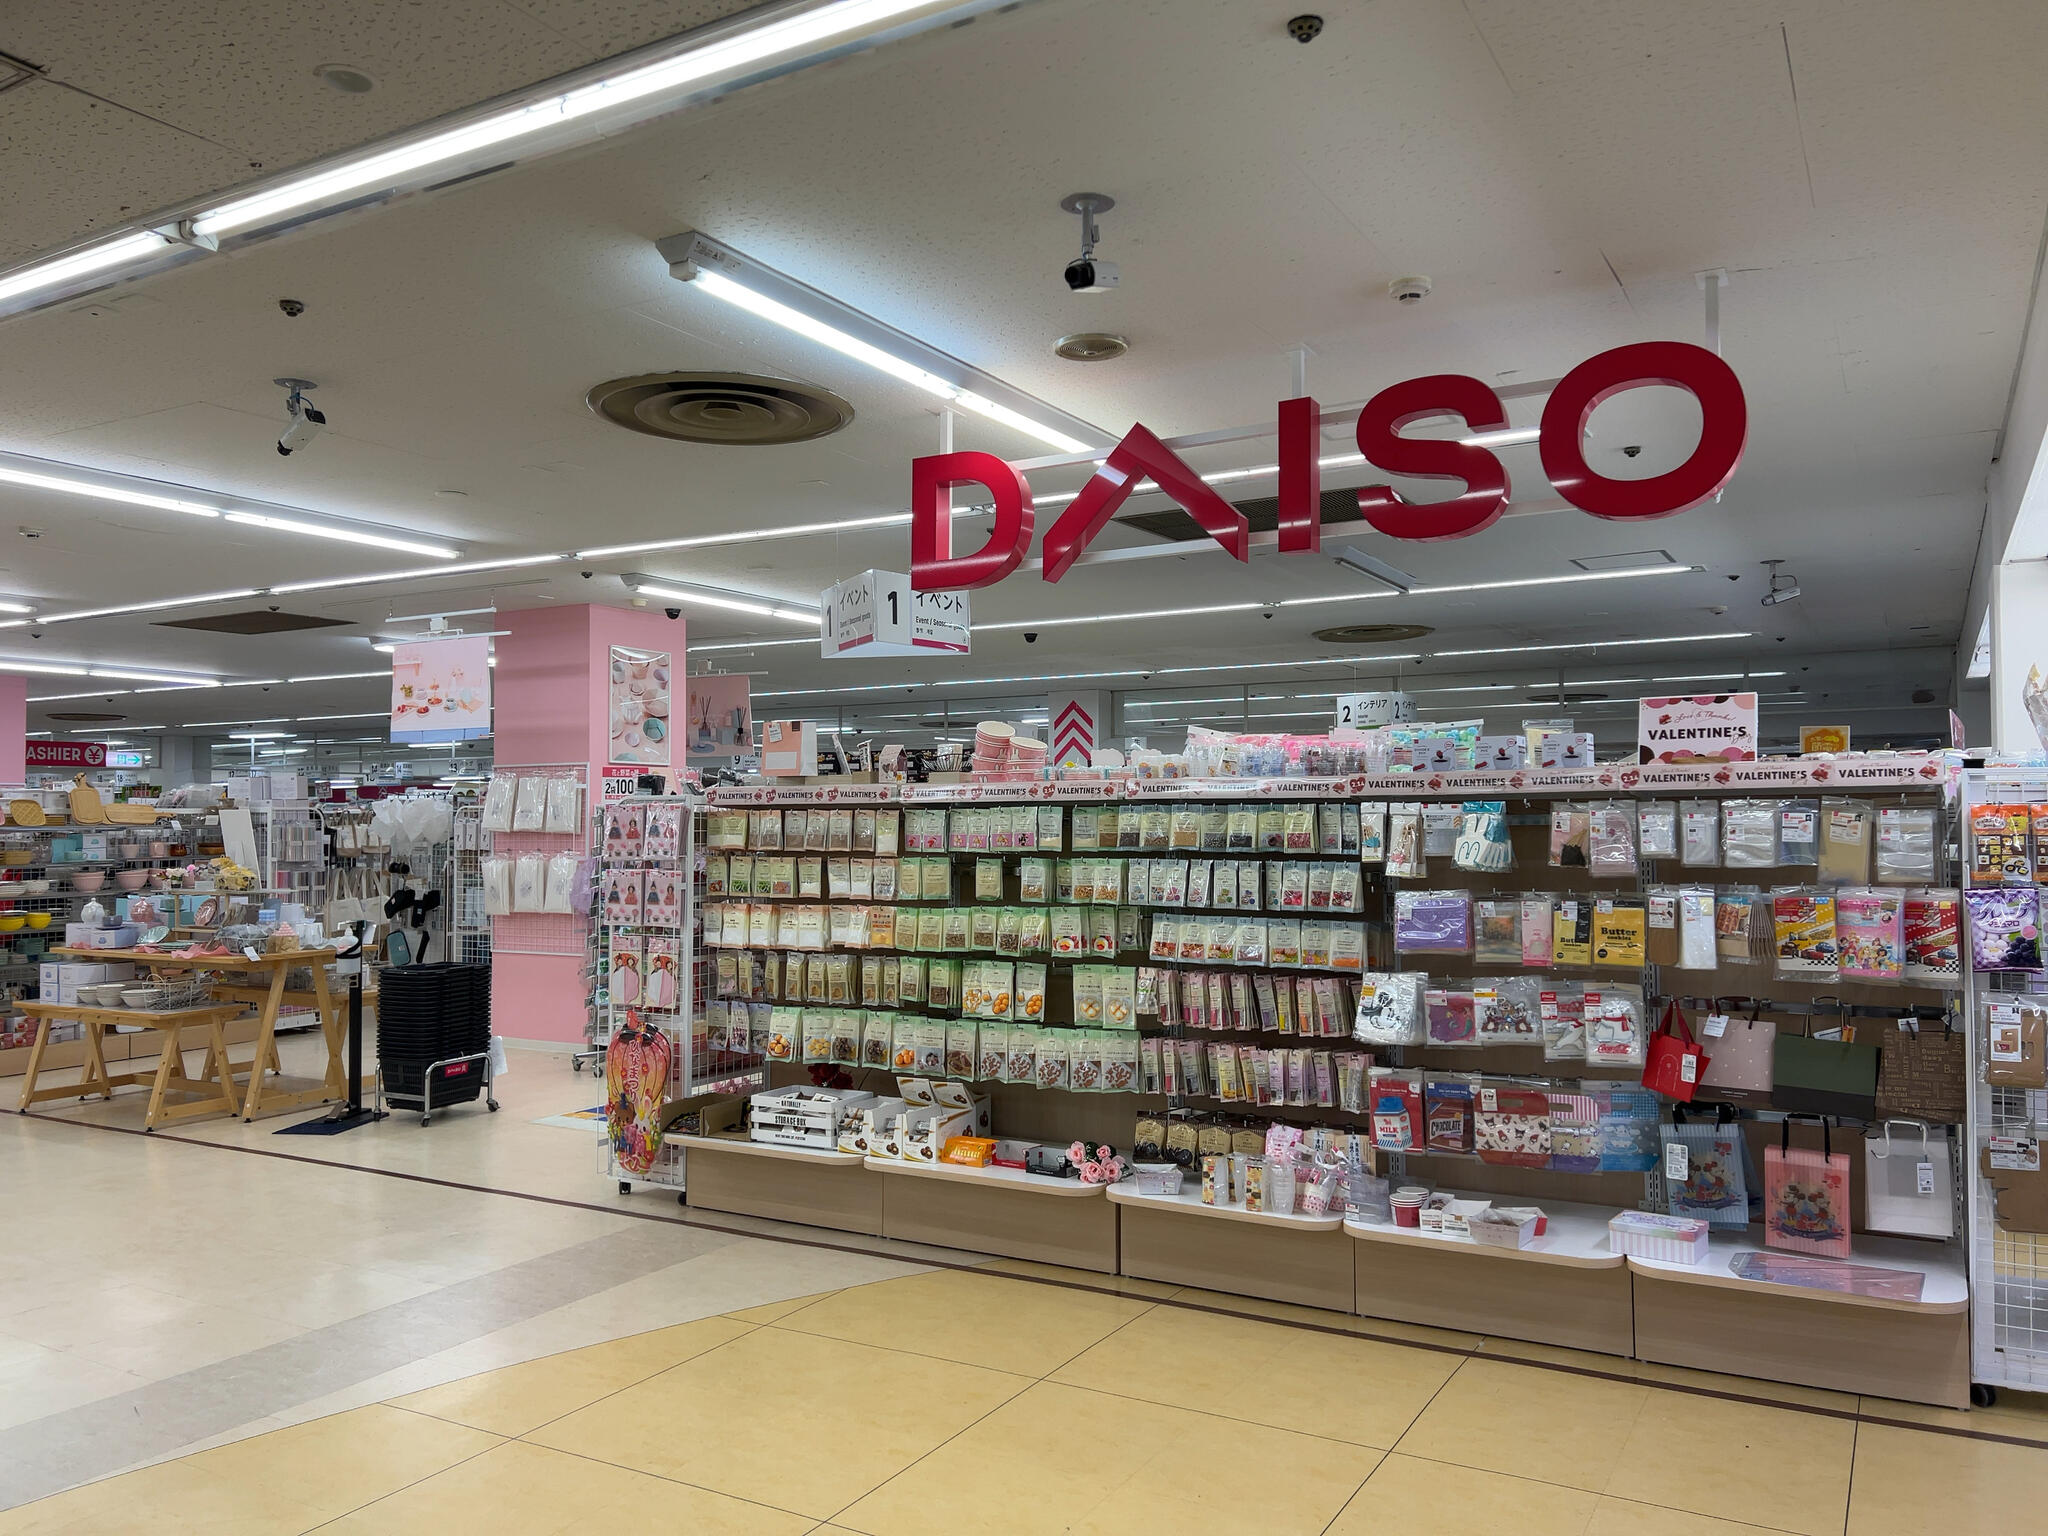 DAISO イオン西宮店の代表写真1